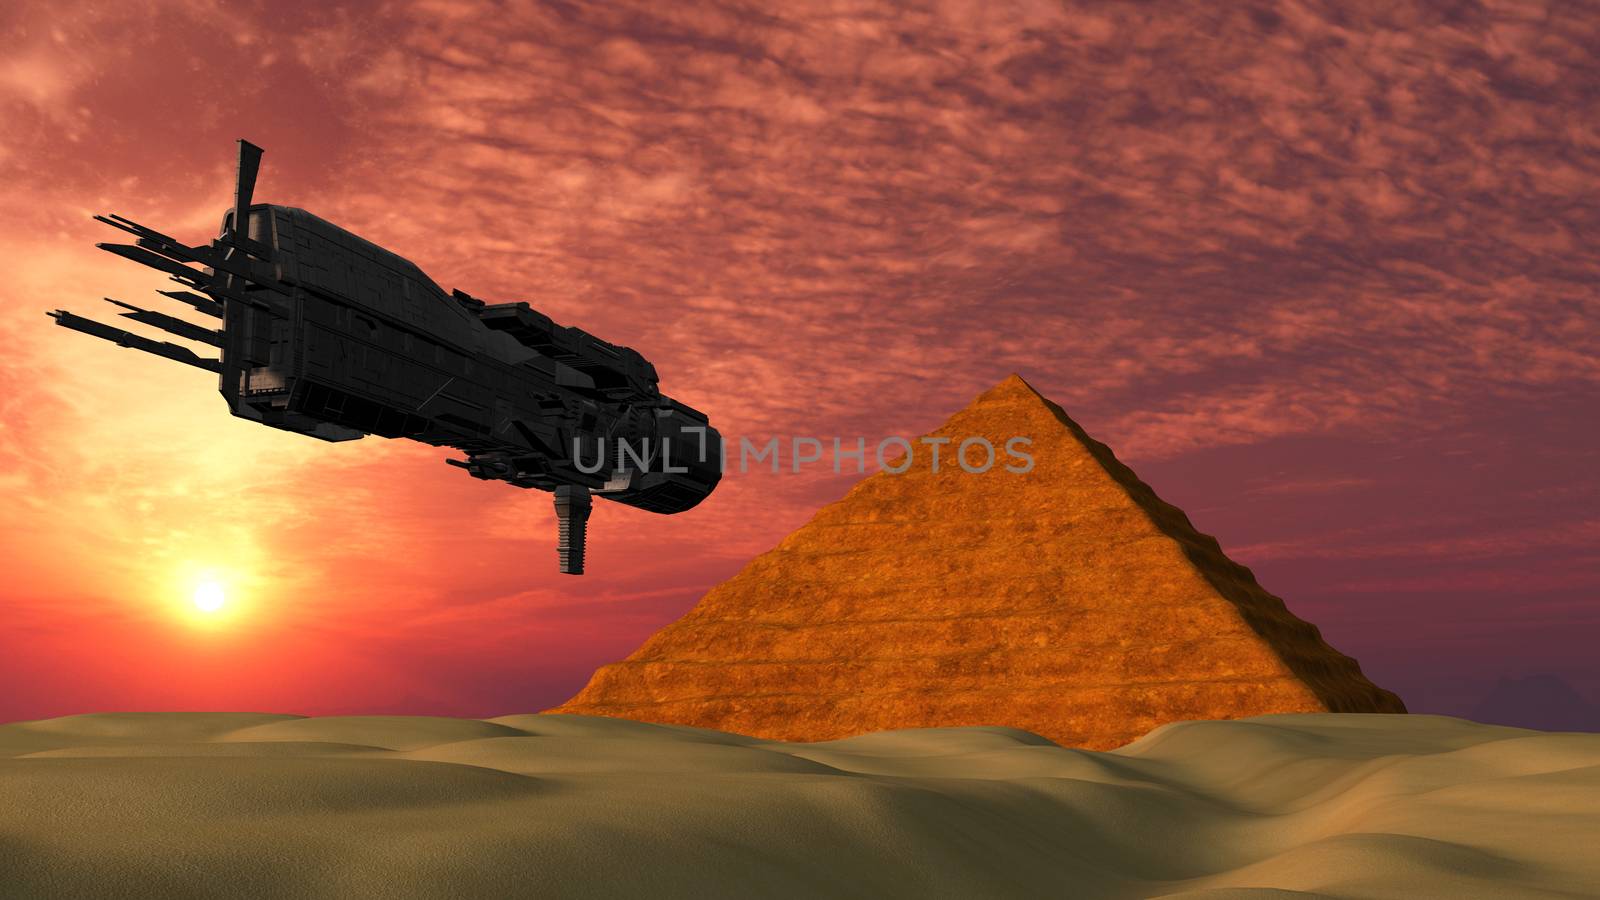 UFO Spaceship Flying towards a Pyramid - Fantasy Alien Illustrations by ankarb